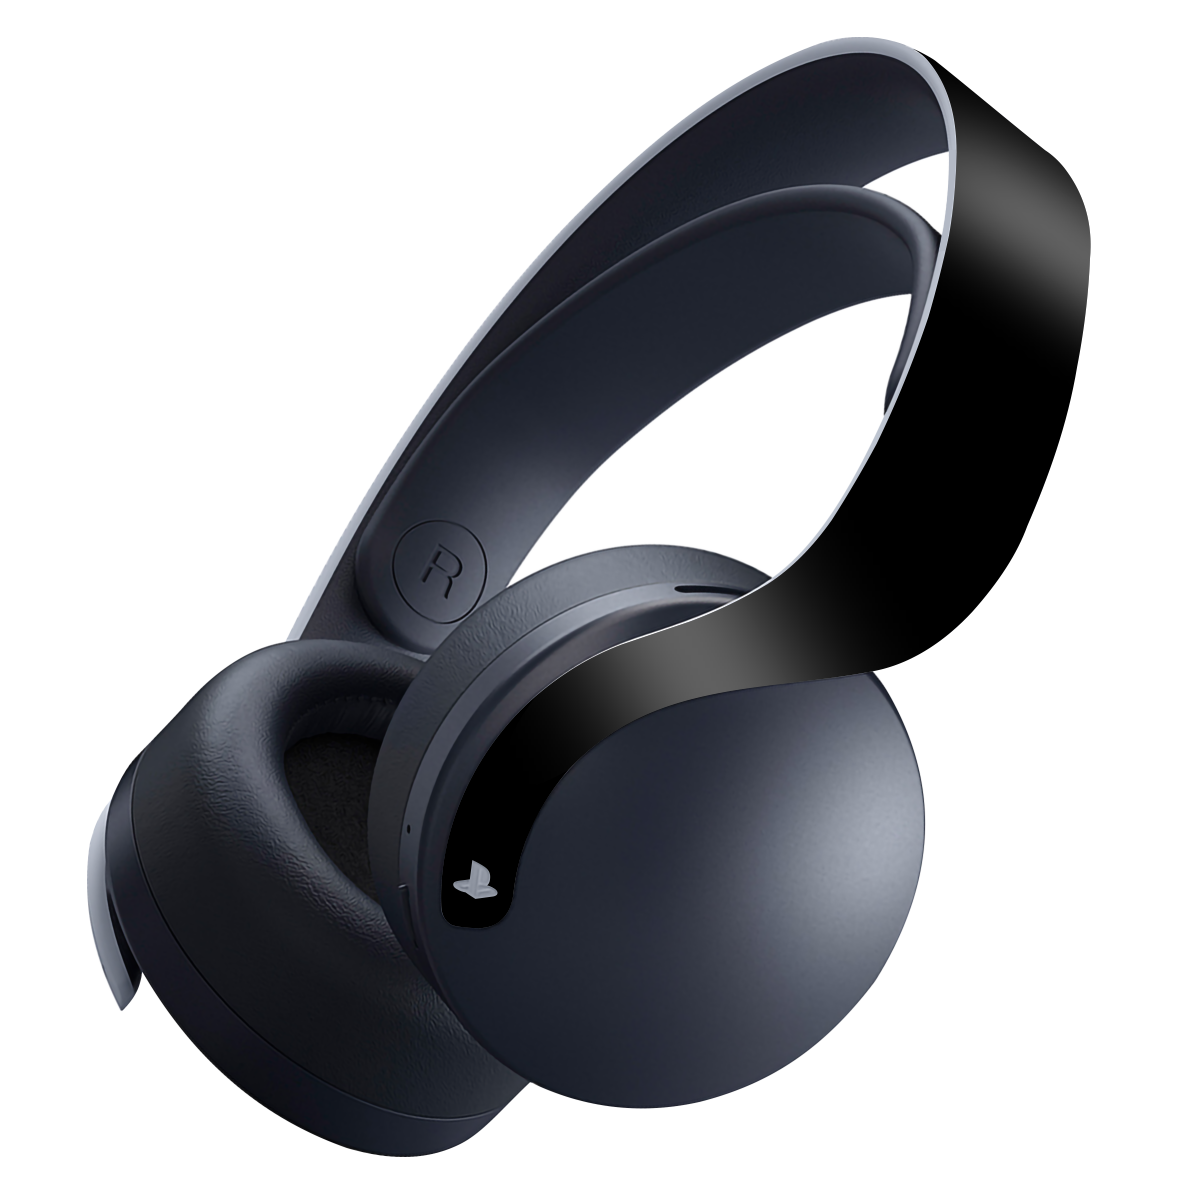 PS5 PlayStation 5 PULSE 3D Wireless Headset Skin - Black Matt Matte Skin Wrap Decal Cover Protector by EasySkinz | EasySkinz.com